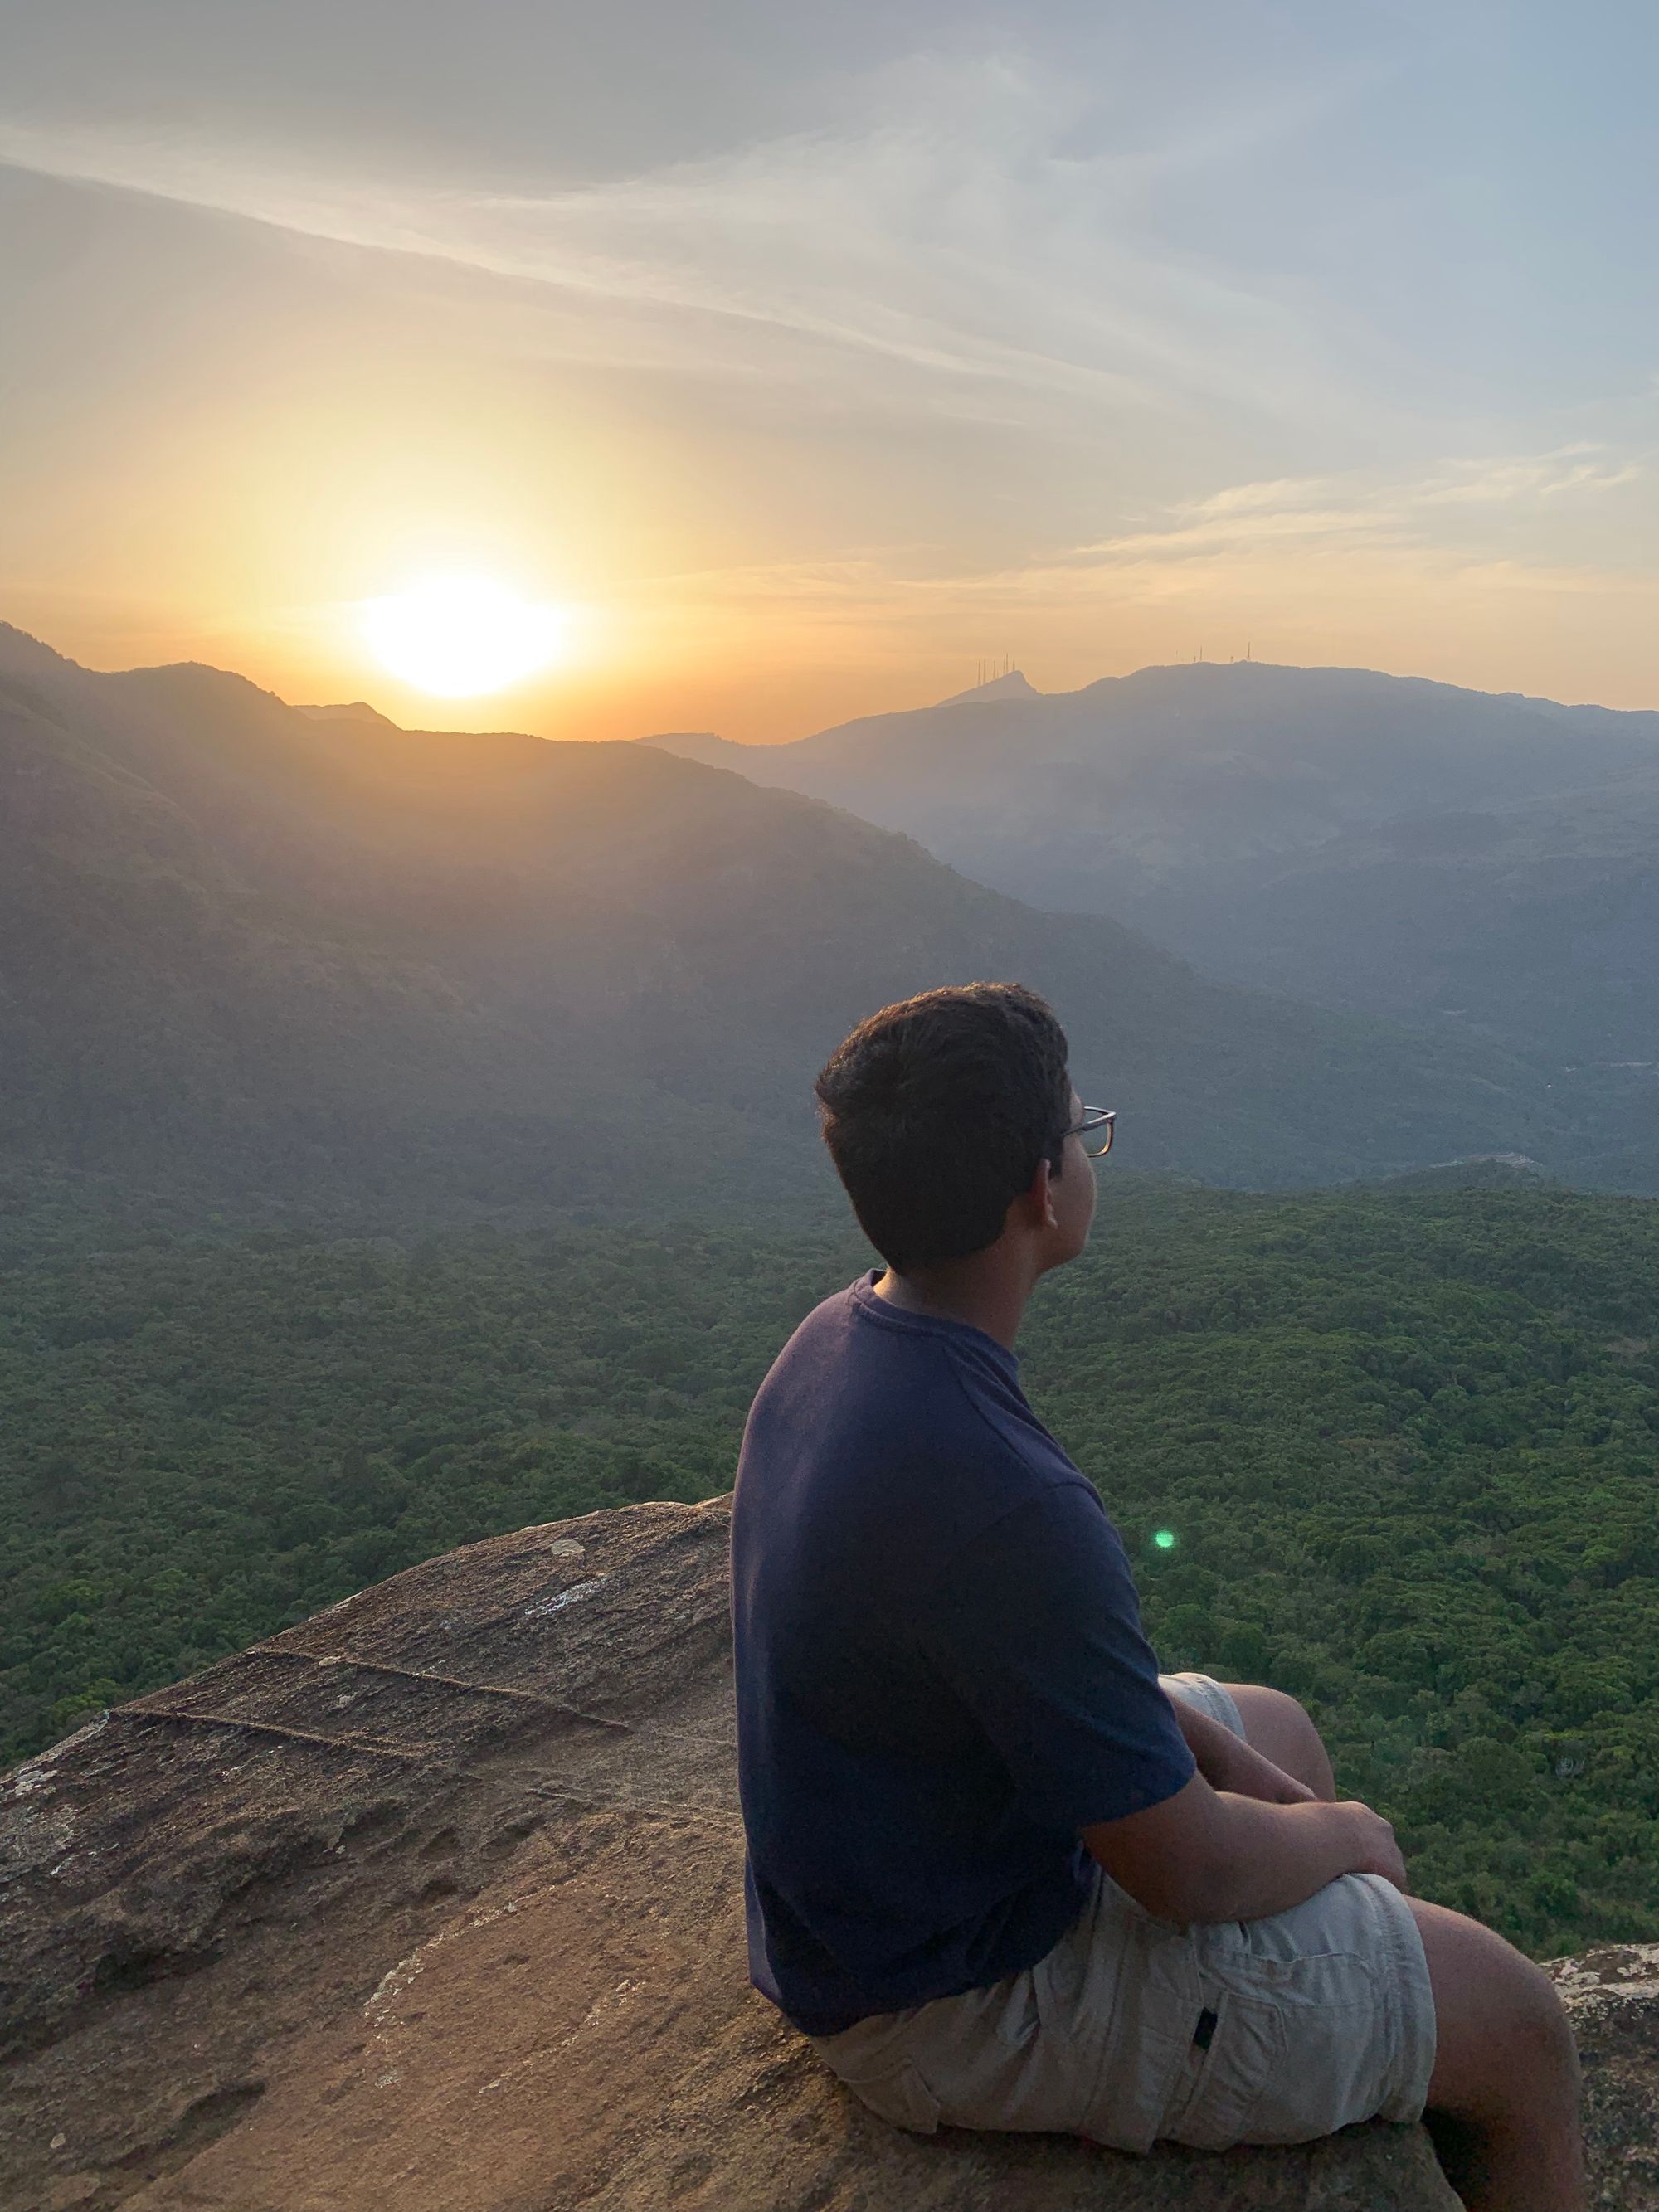 A boy admiring the sunset from Pitawala Pathana, Sri Lanka